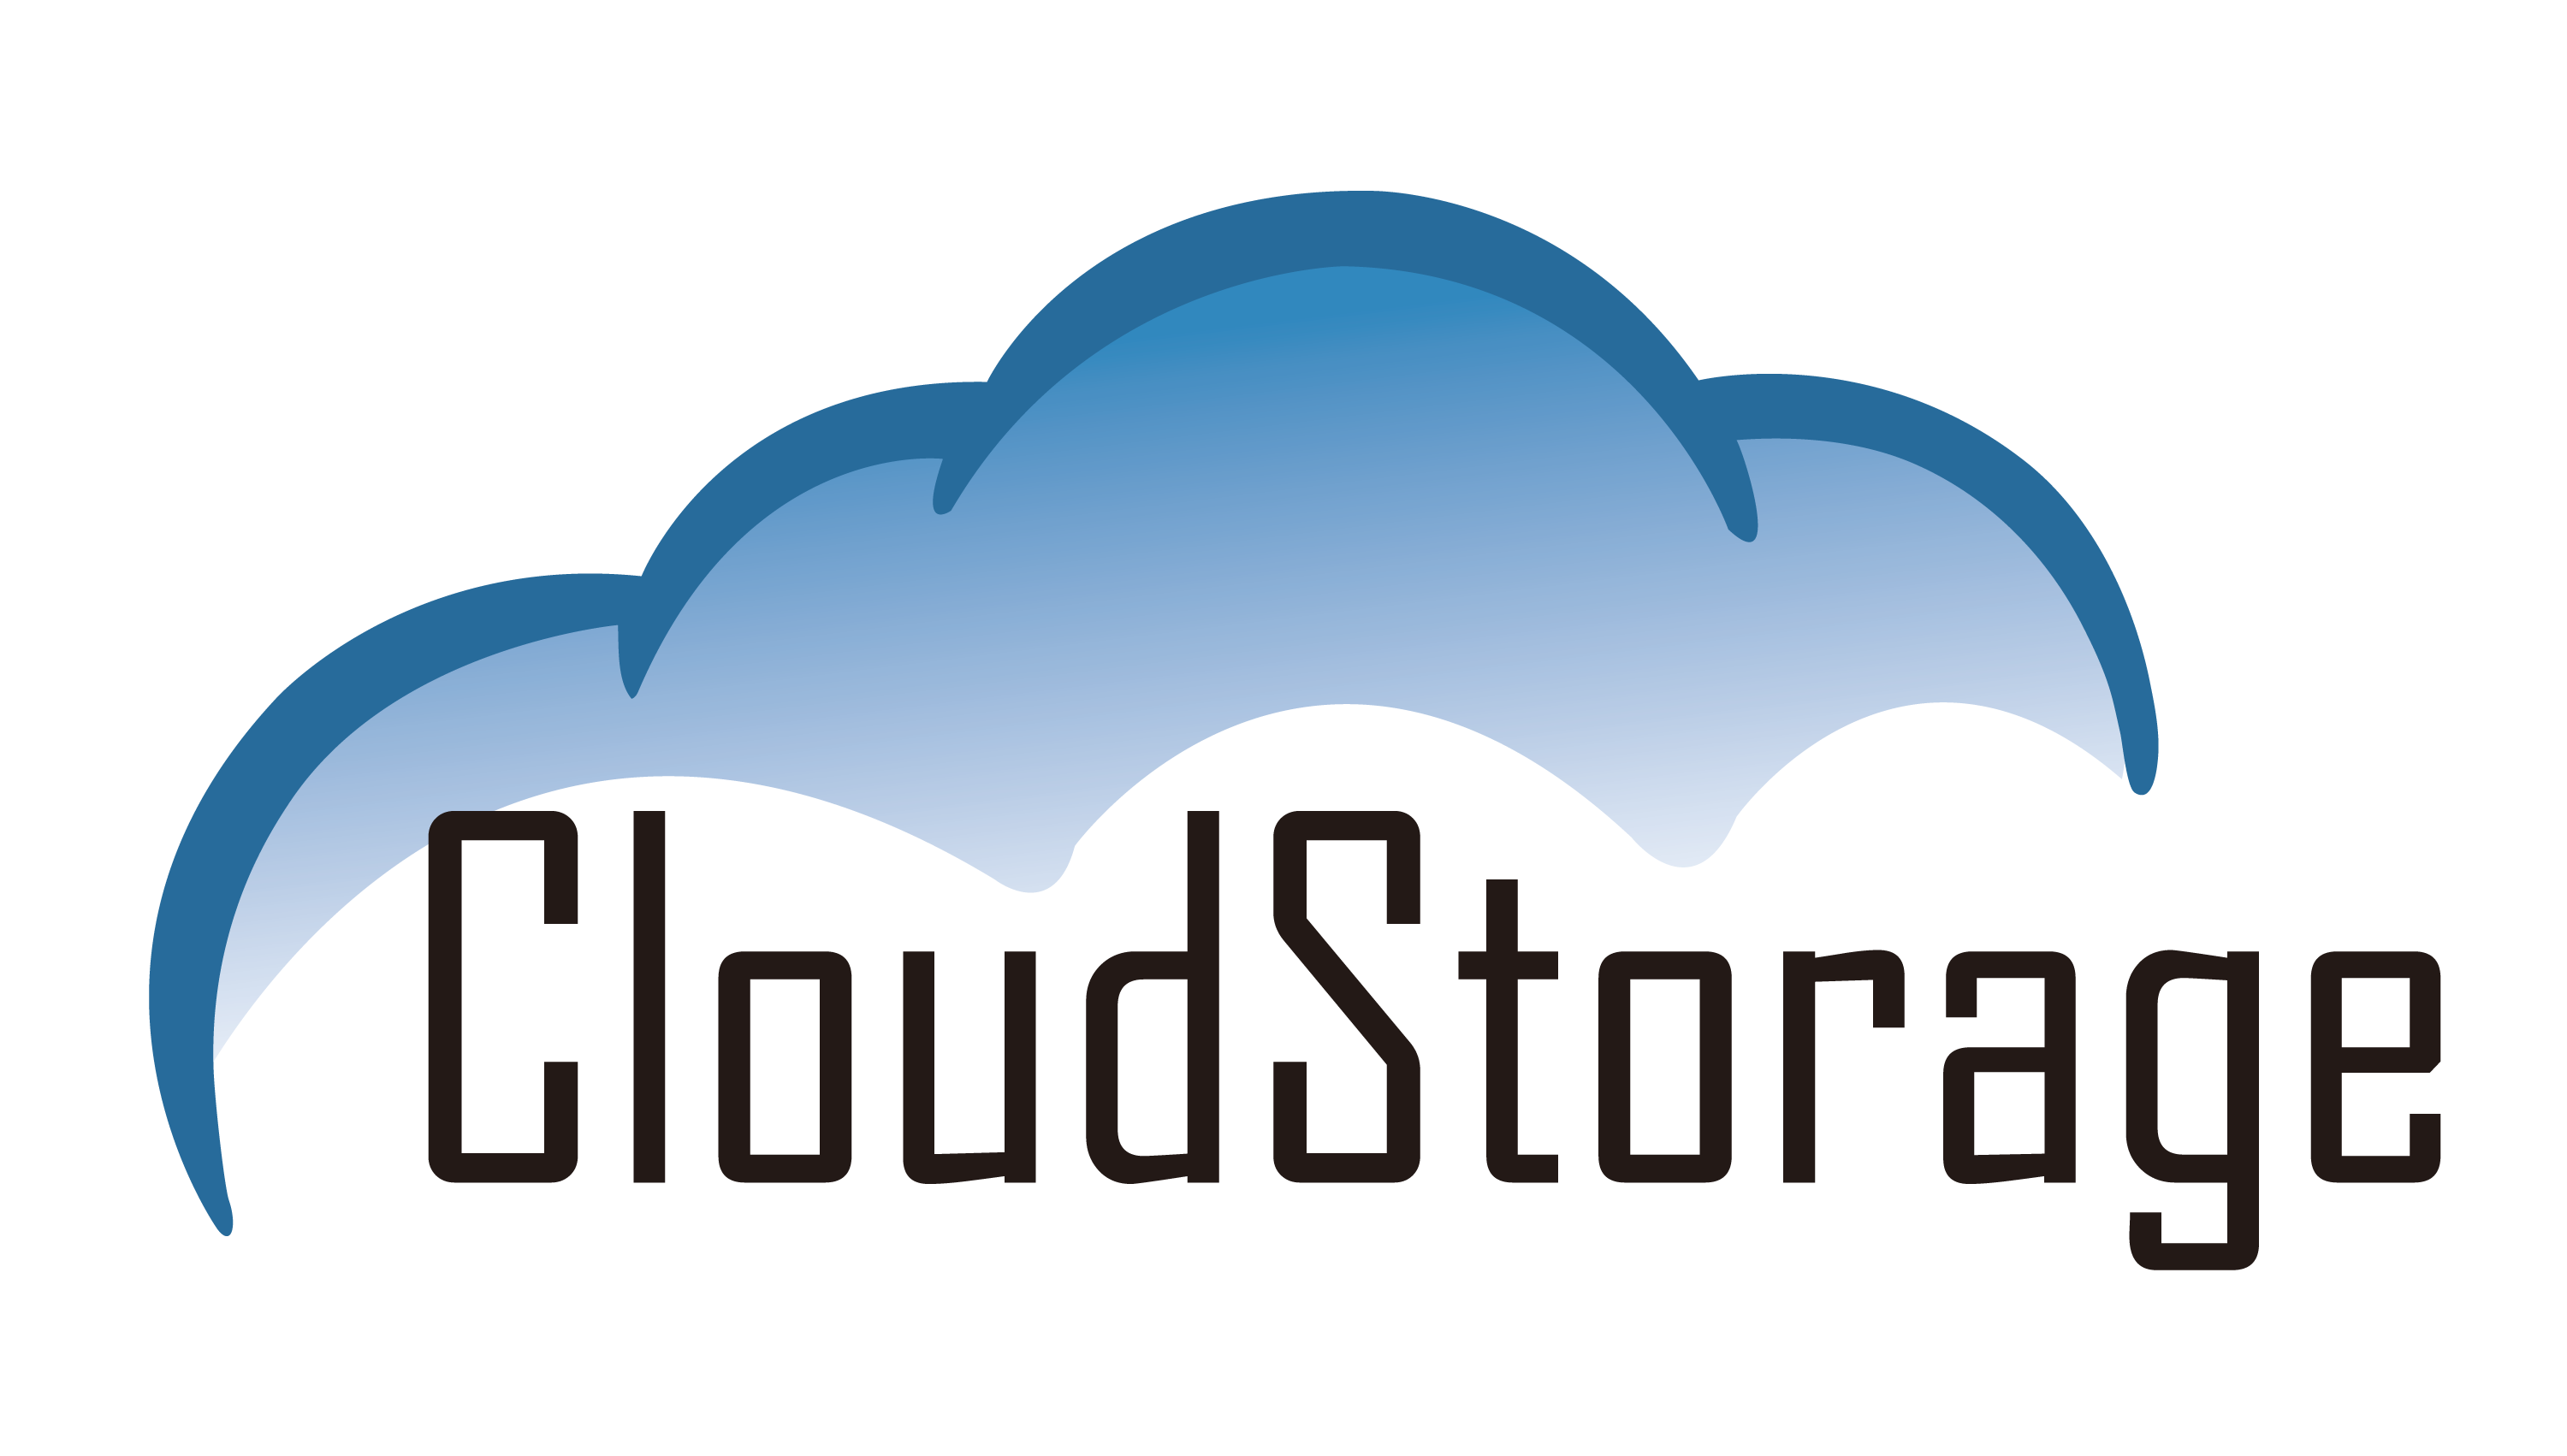 Cloud Storage